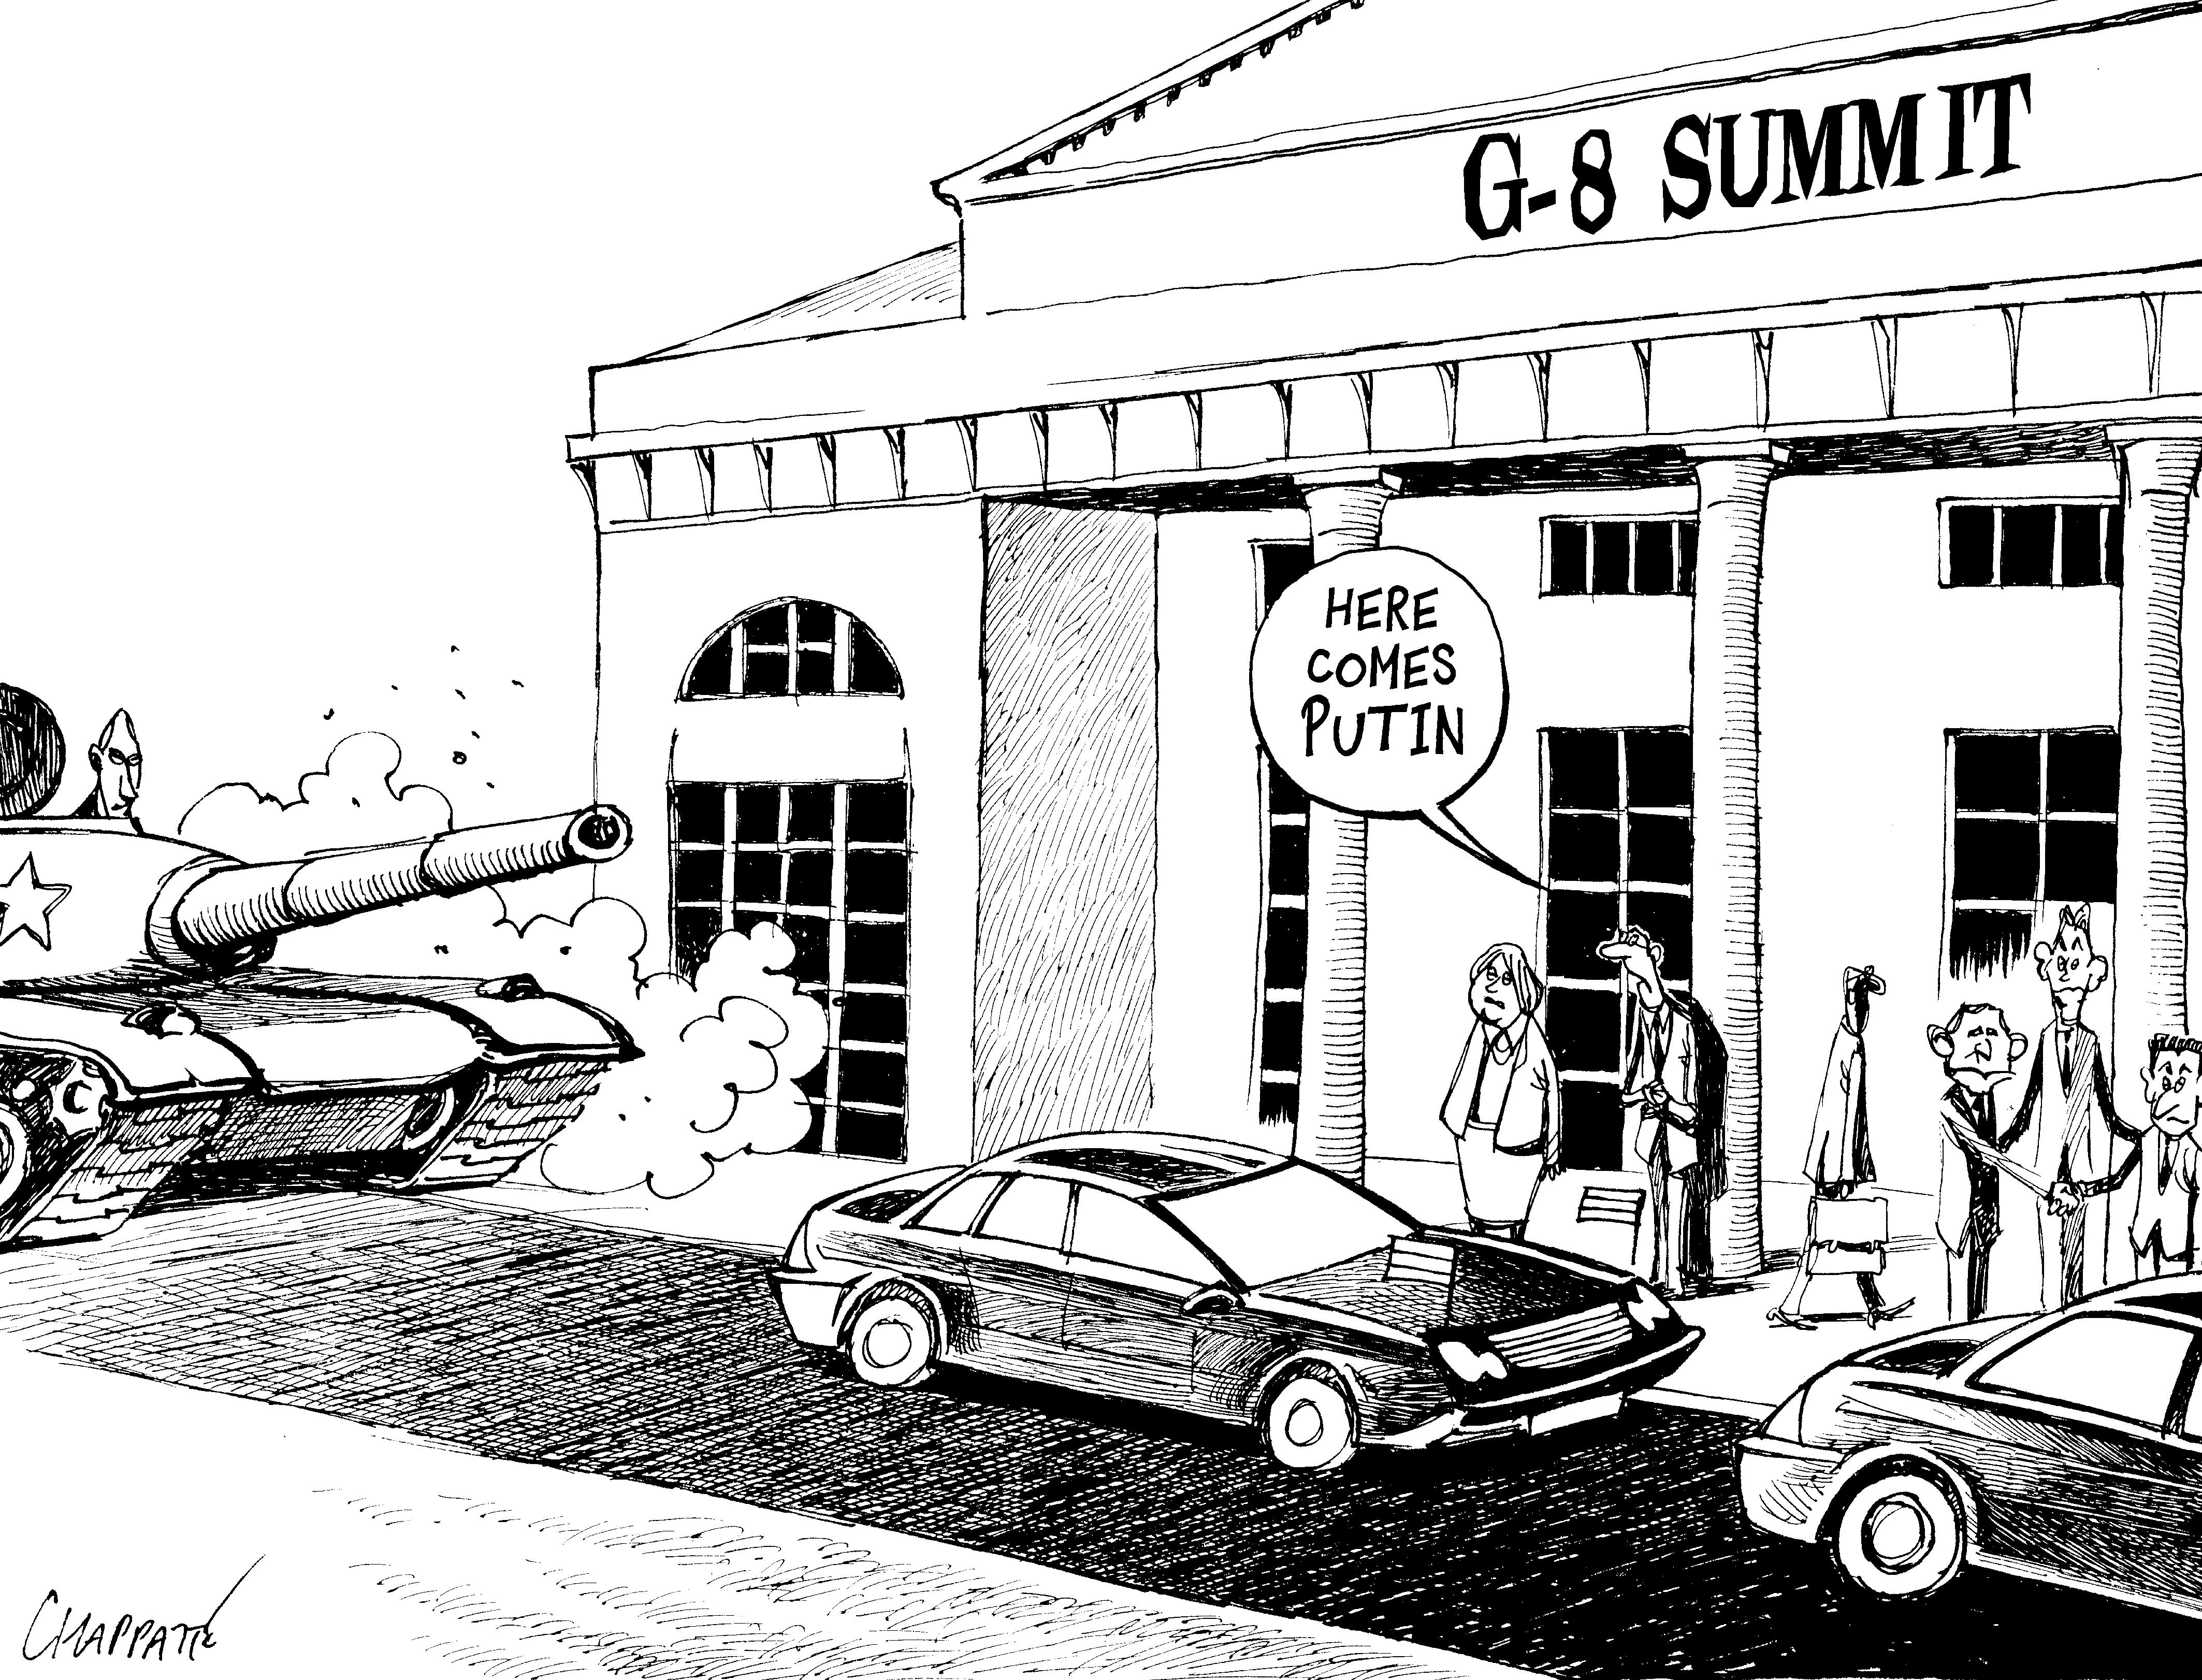 G-8 Summit in Rostock